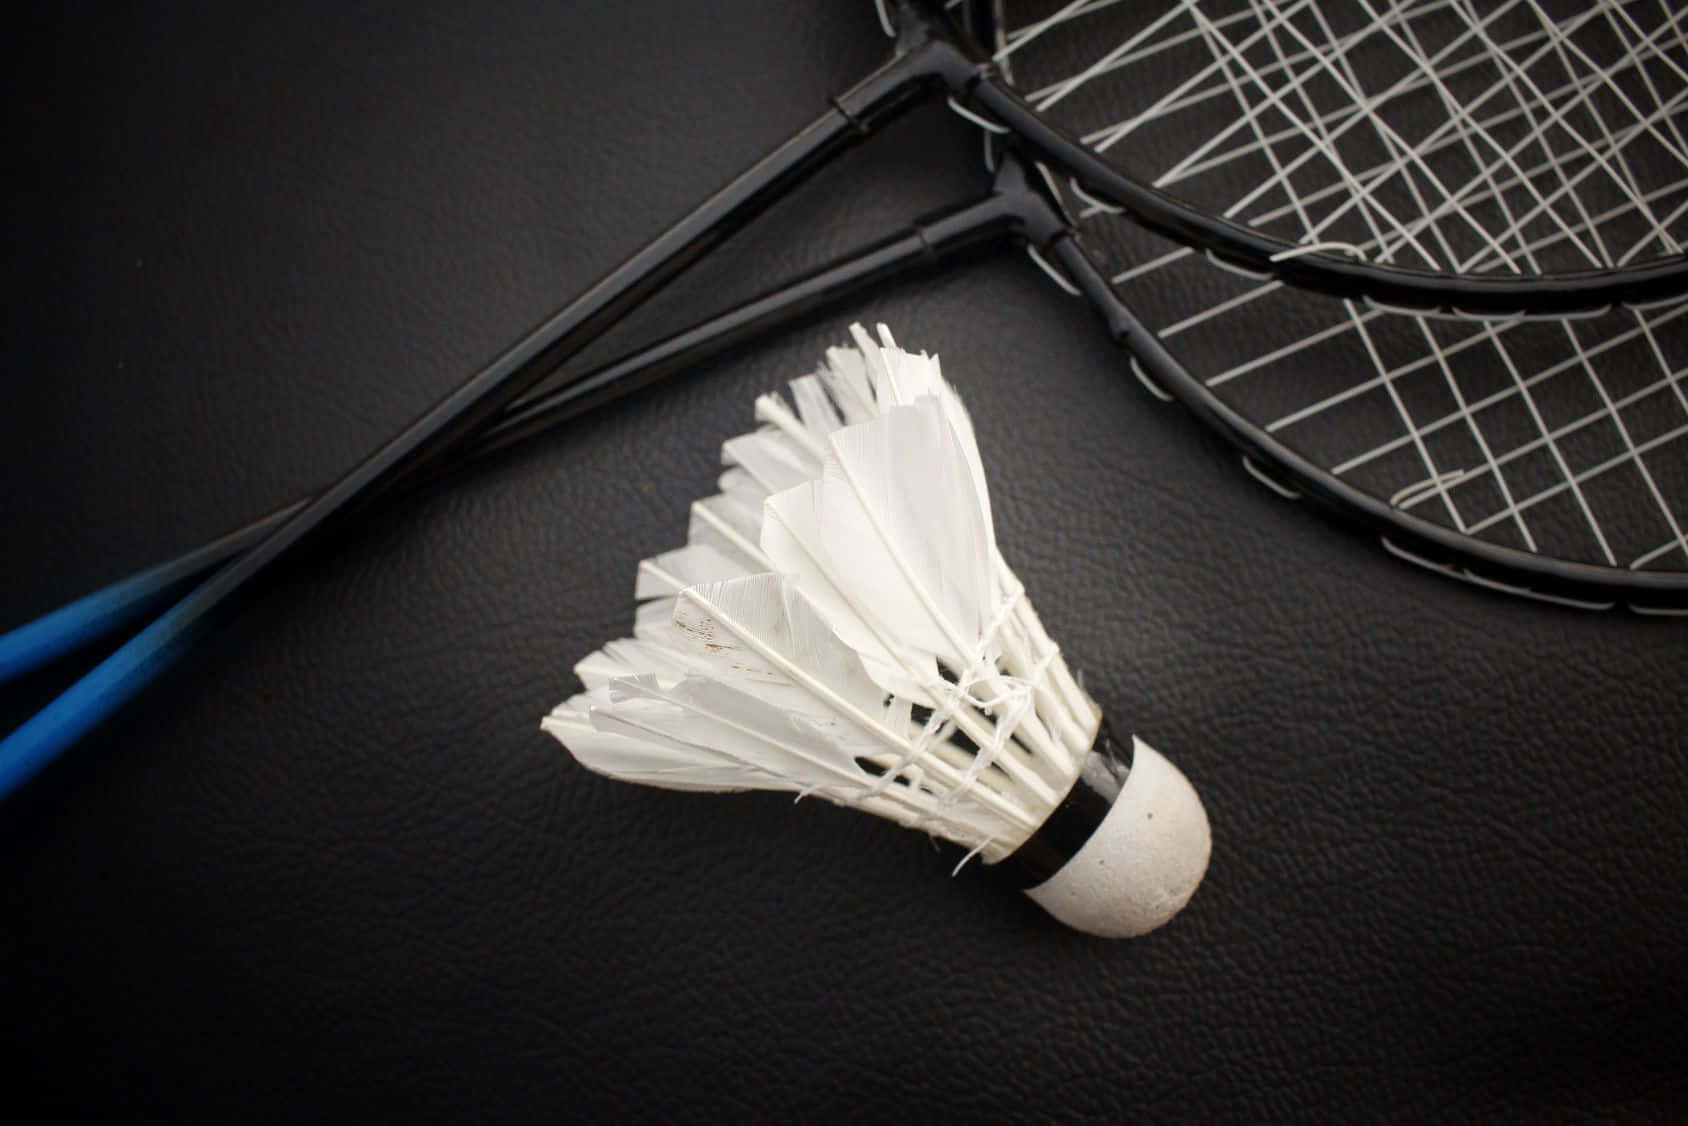 500 Badminton Pictures HQ  Download Free Images on Unsplash